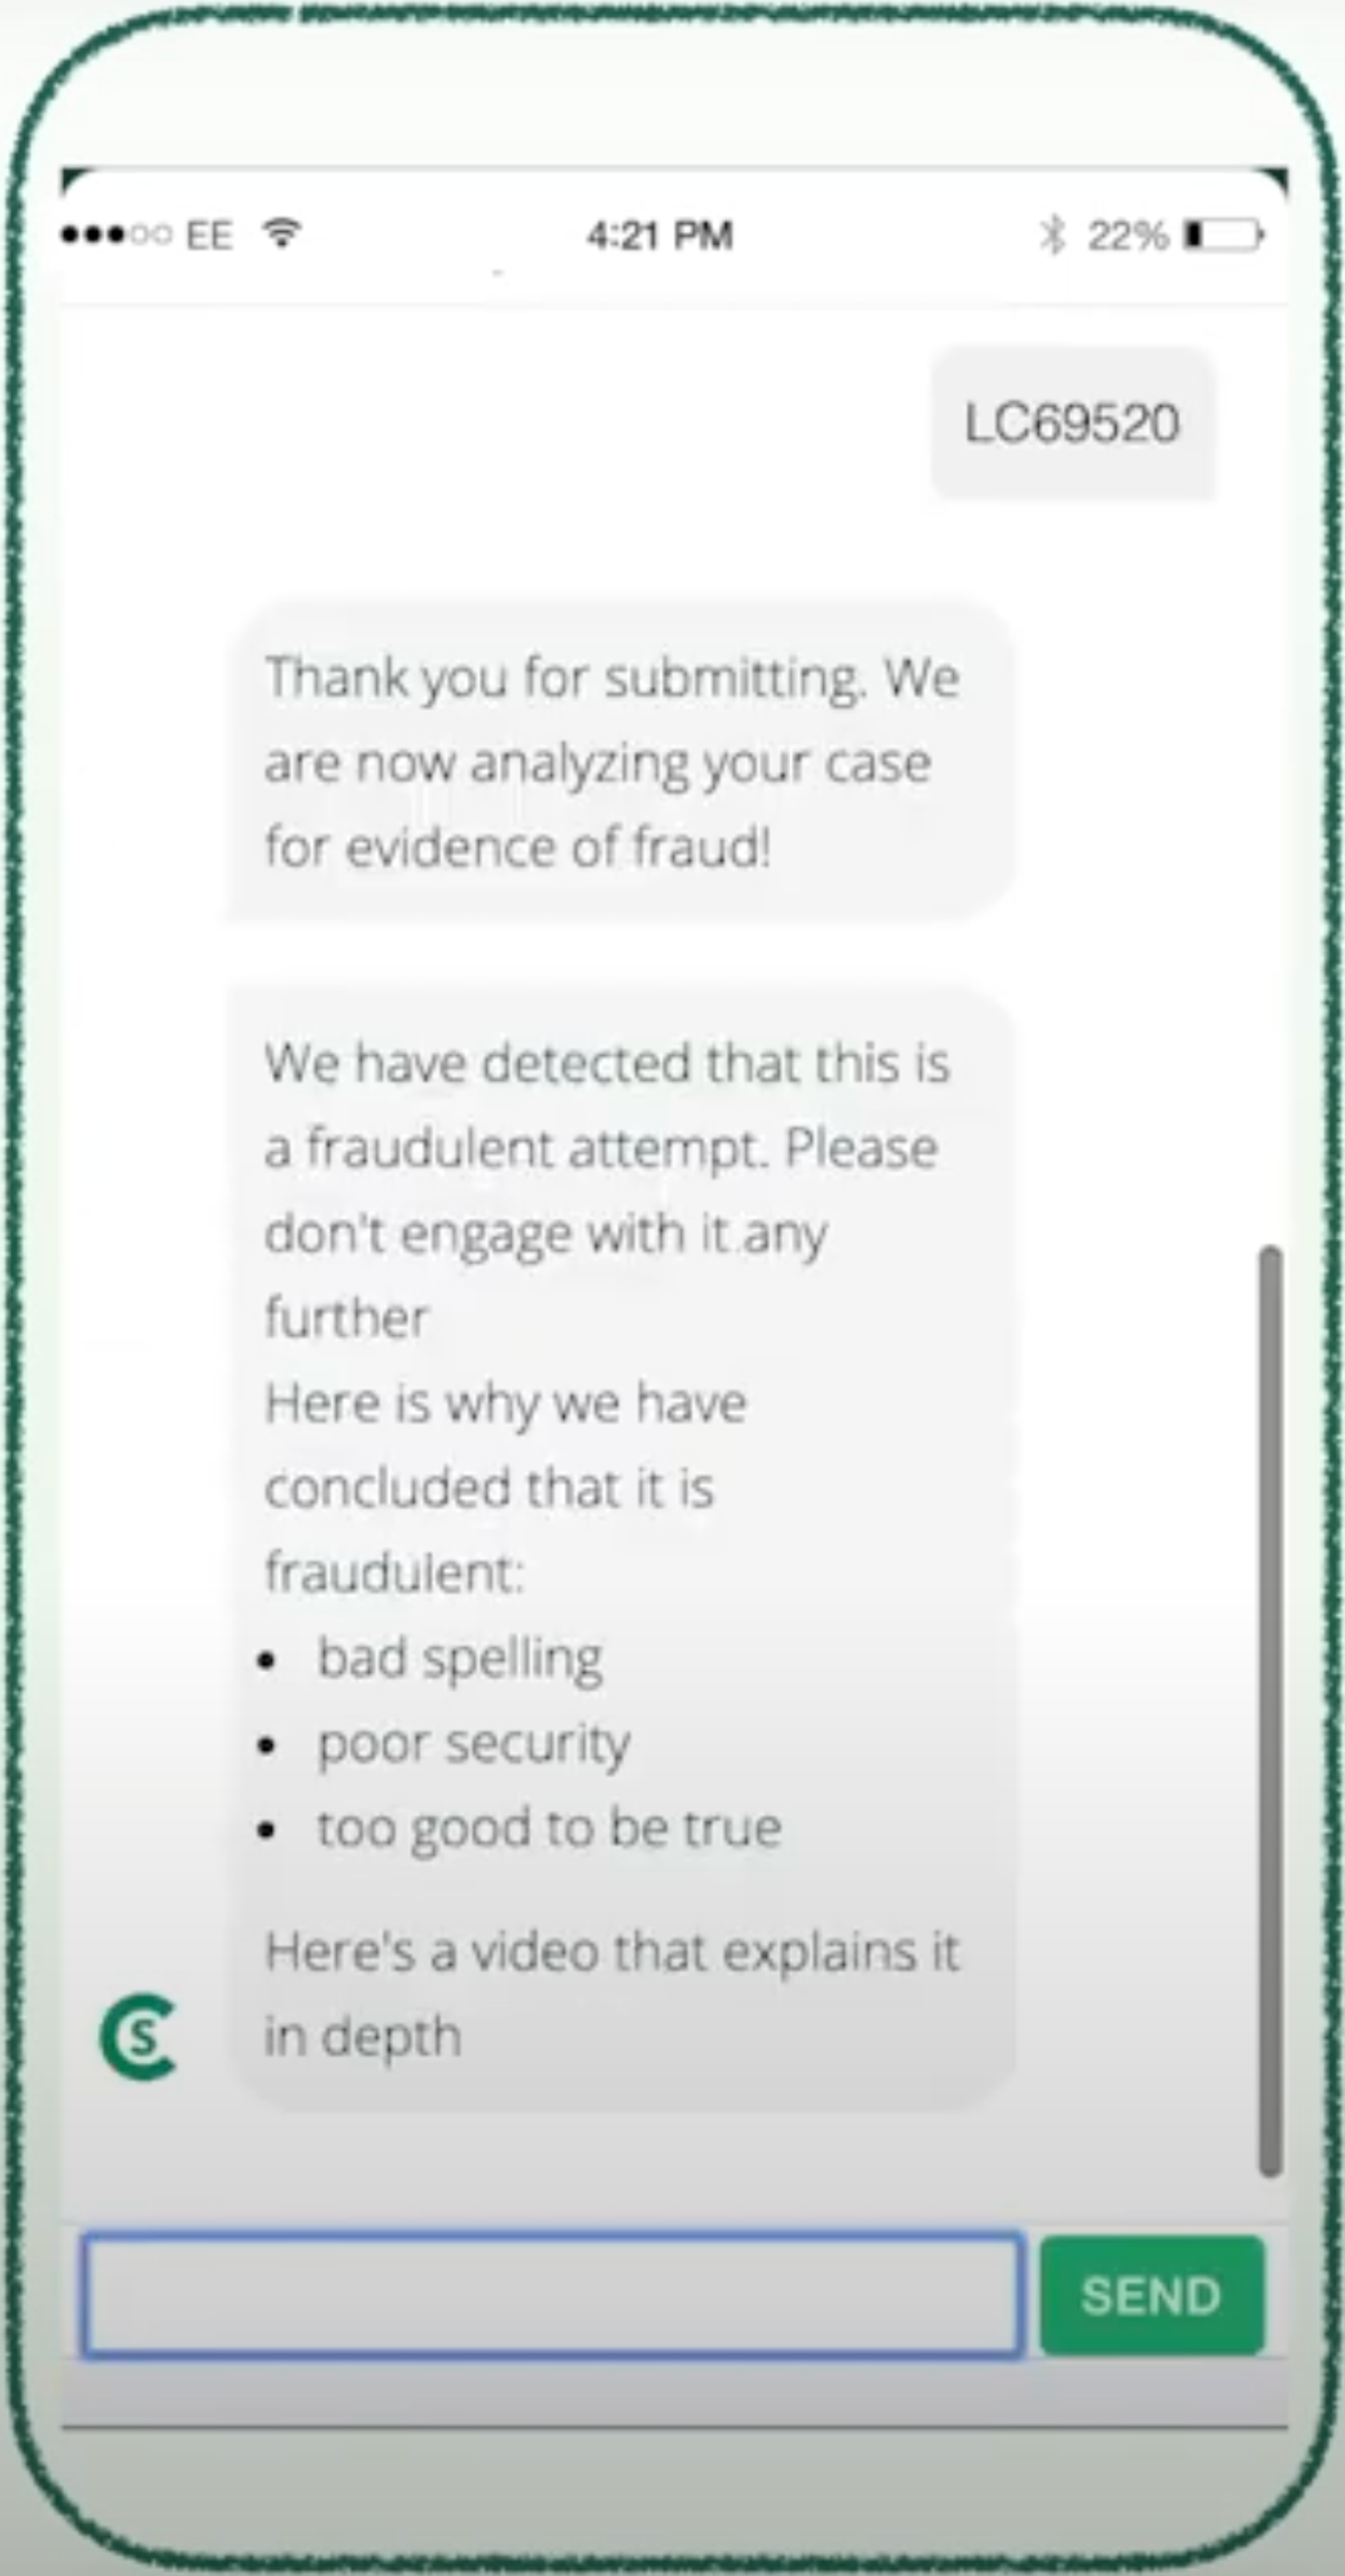 Analysed message seen on Lloyds' app